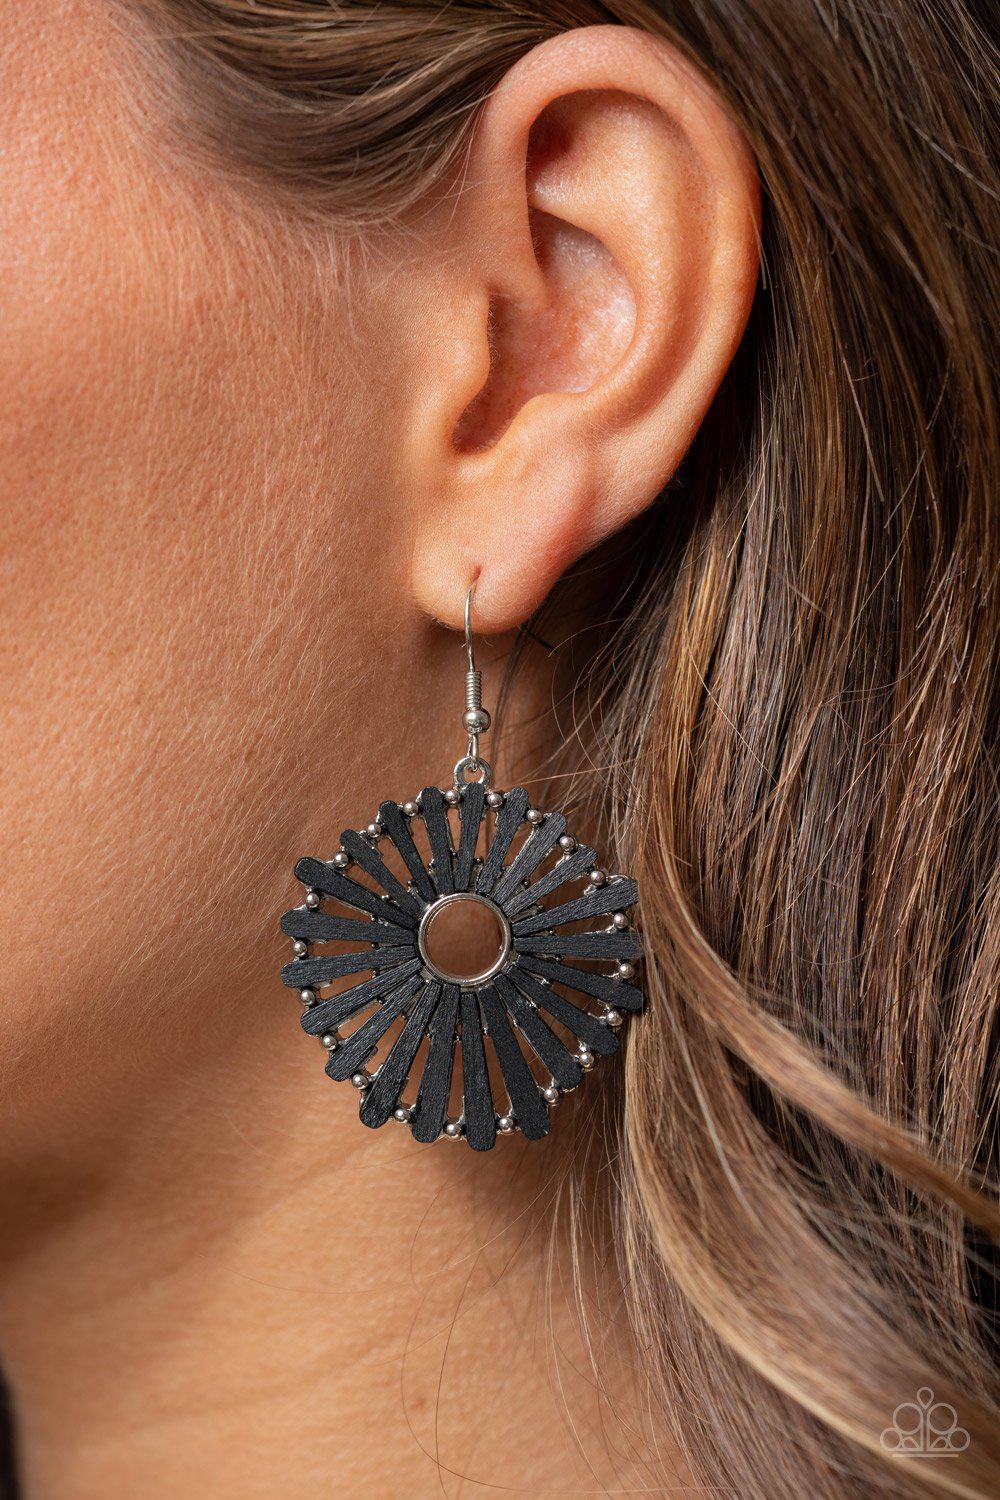 SPOKE Too Soon Black Wood Earrings - Paparazzi Accessories- lightbox - CarasShop.com - $5 Jewelry by Cara Jewels